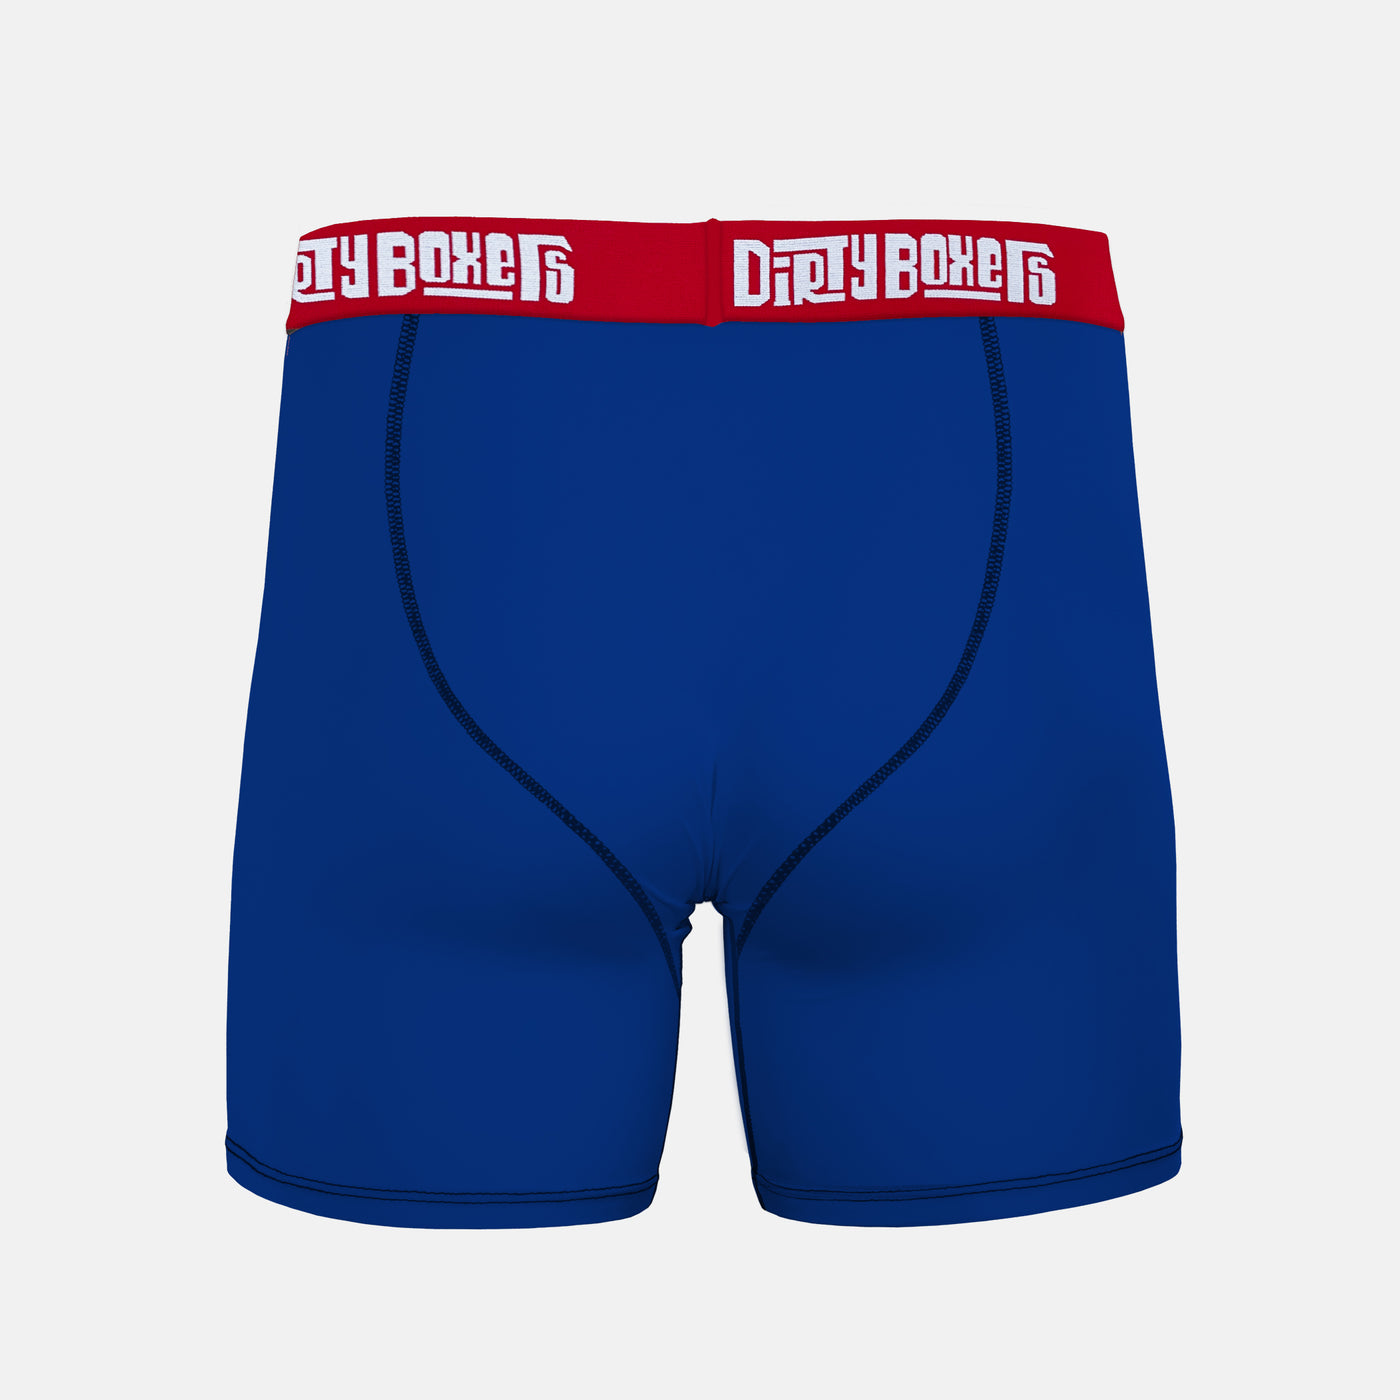 Seaman Dirty Boxers Men's Underwear